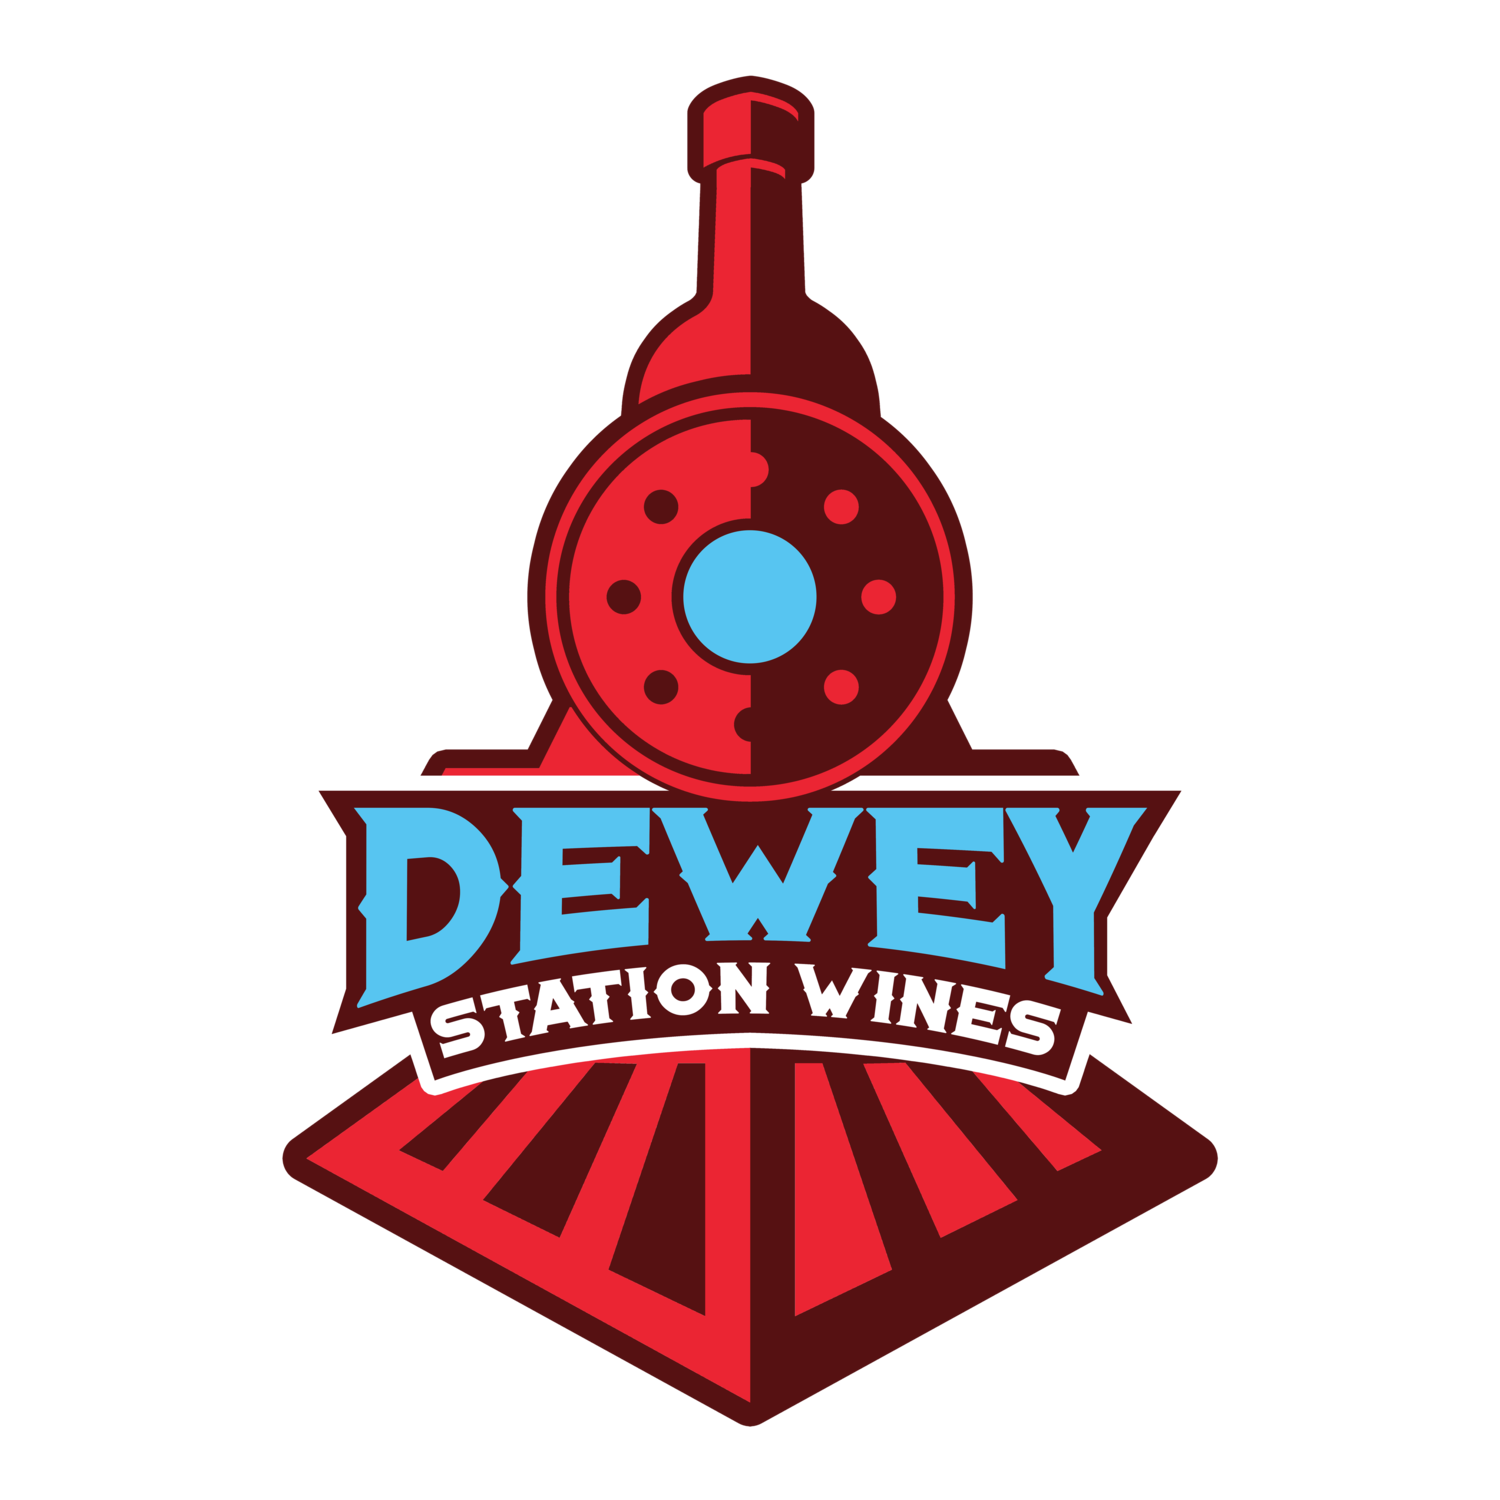 Dewey Station Wines